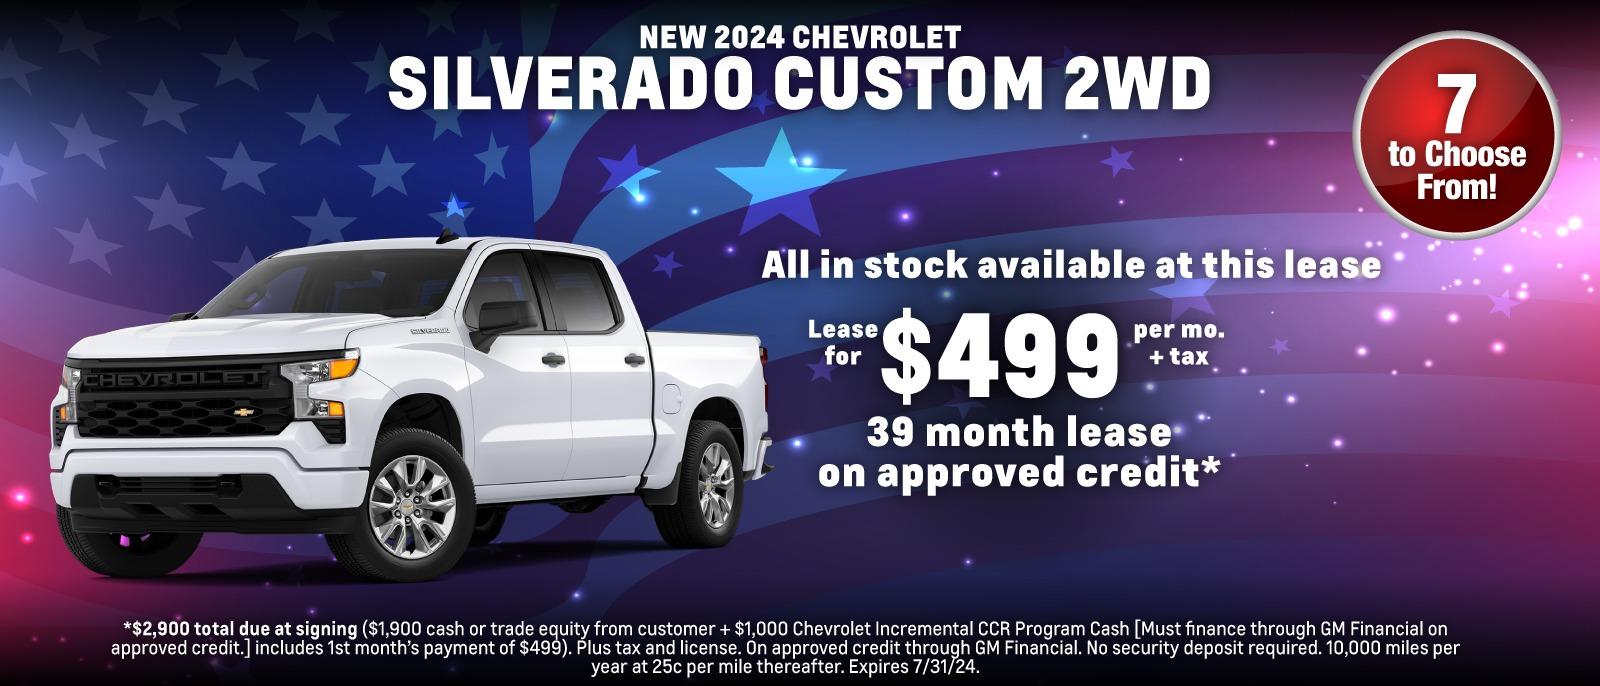 new 2024 Chevy Silverado Custom 2WD  - lease $499/month